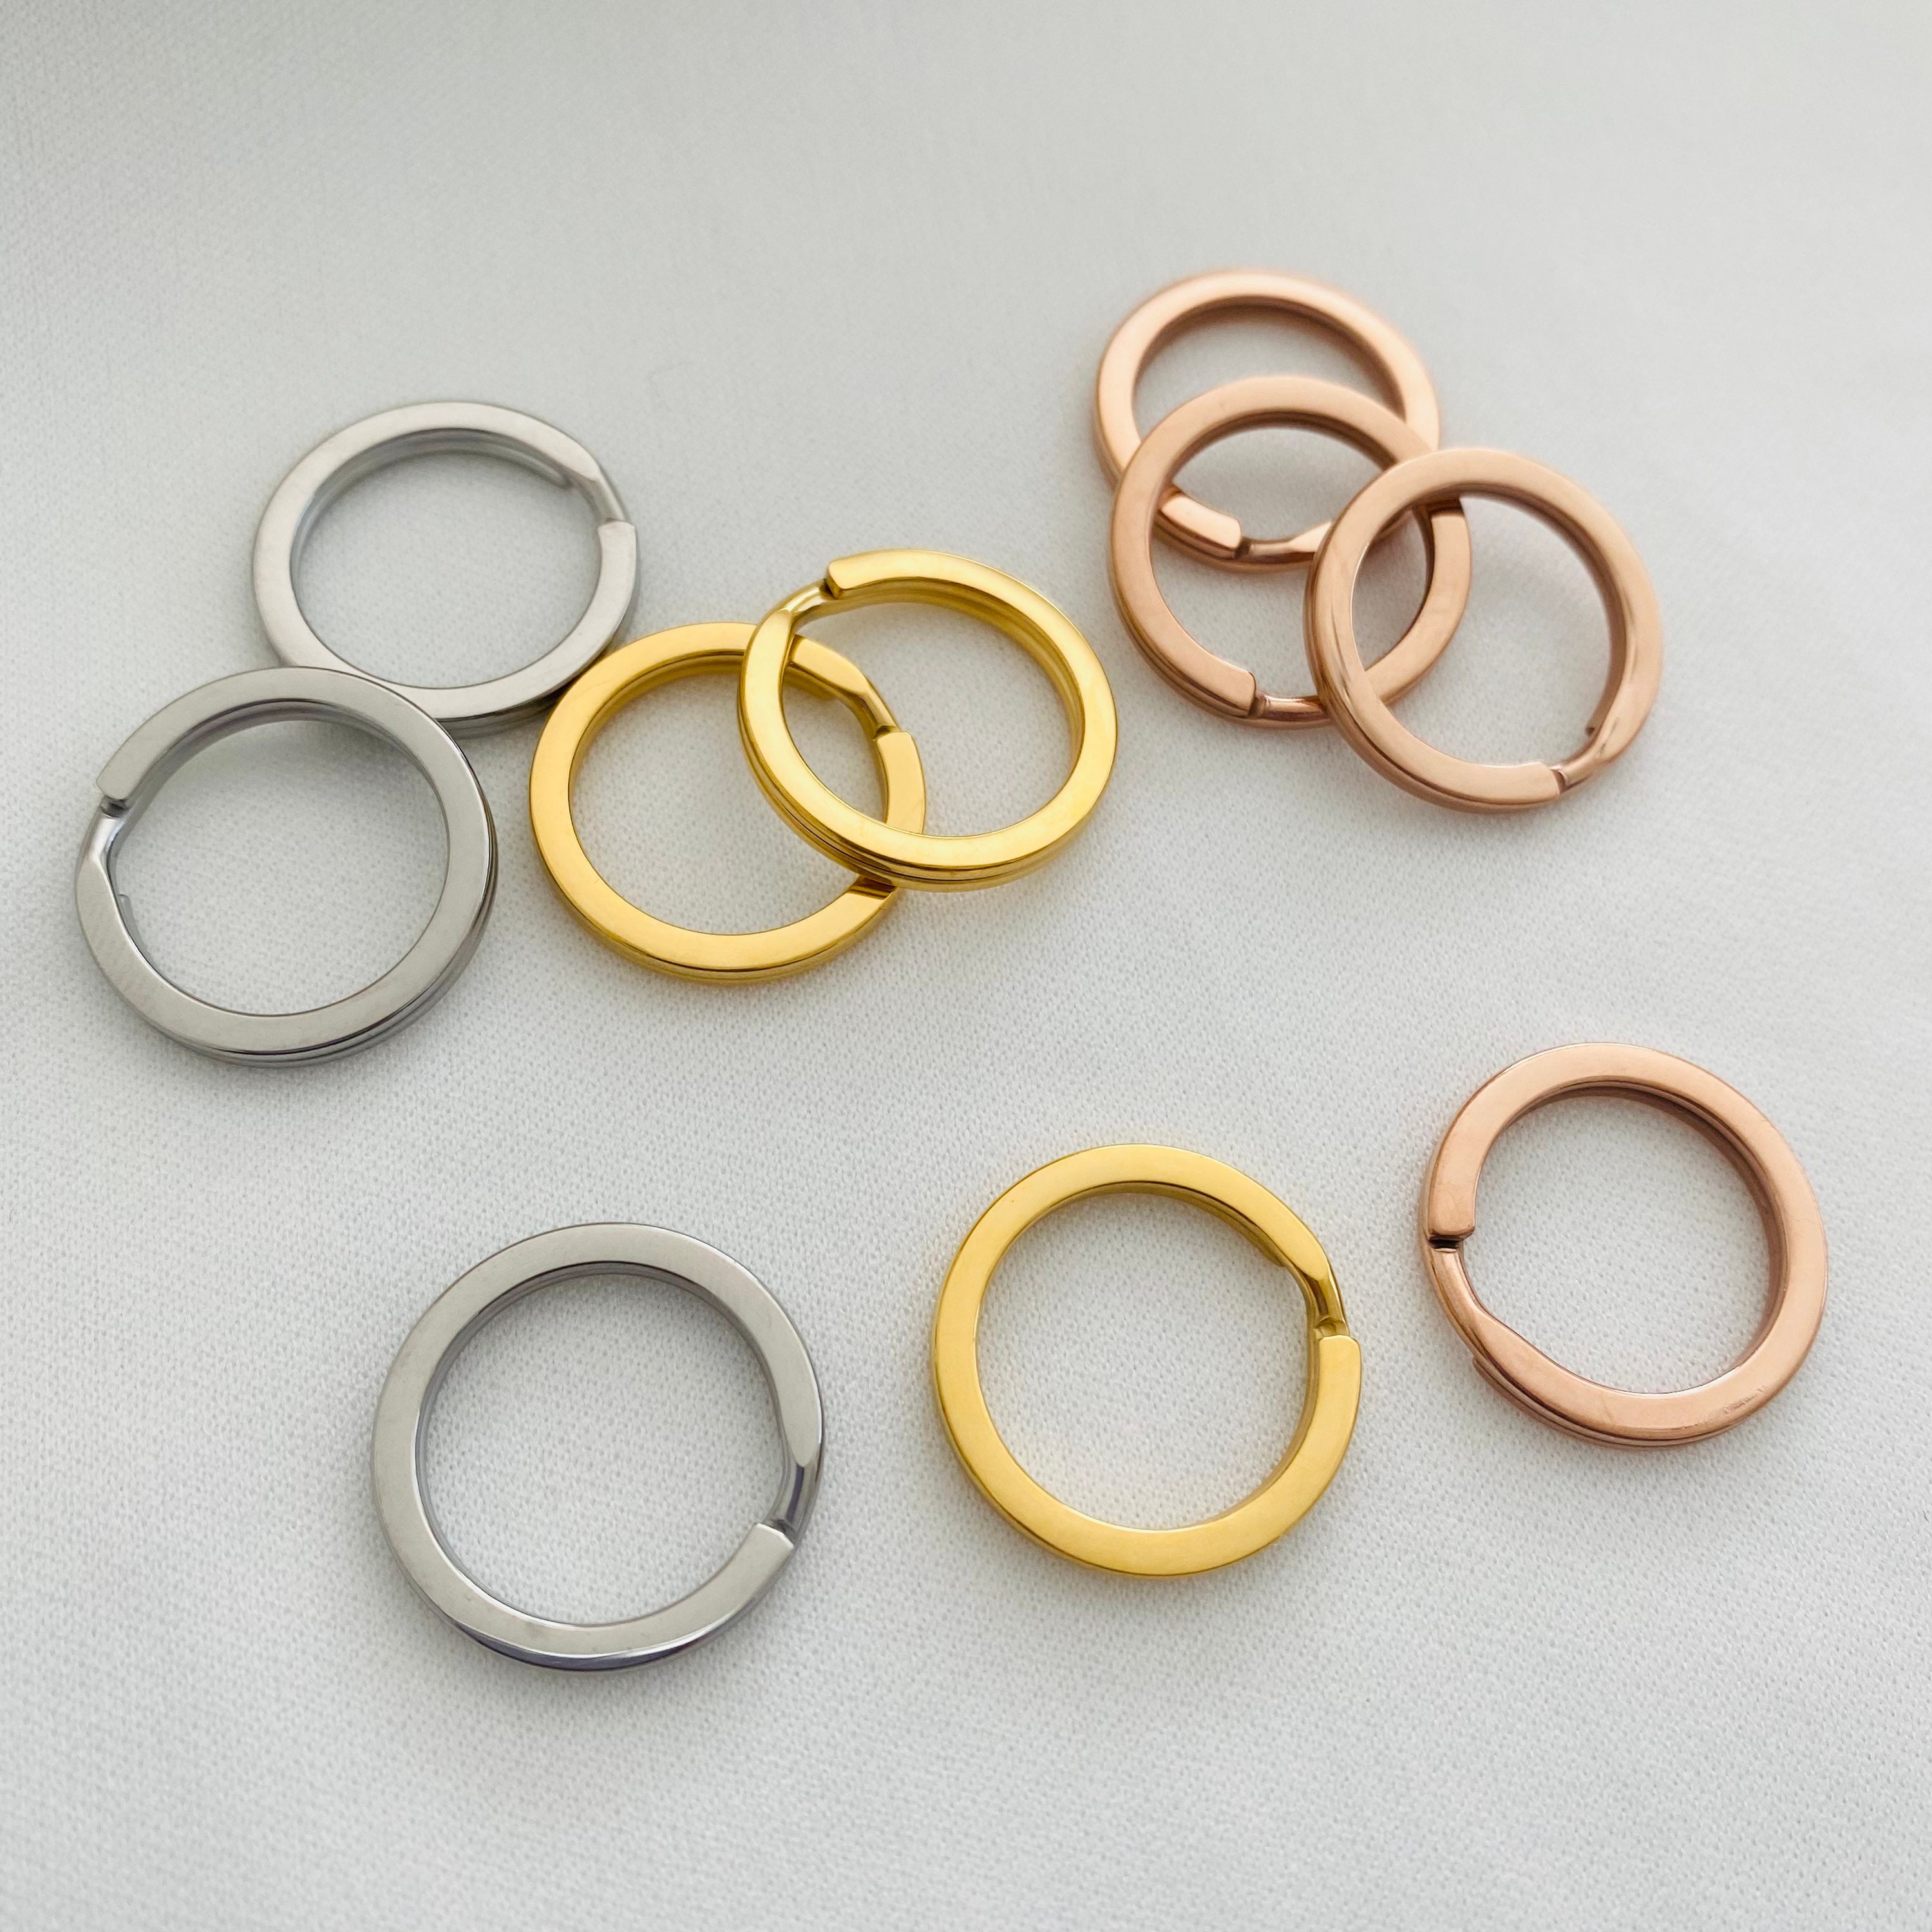 100 Pack - 9/16 Key Rings - Dark Black Color - 15mm Split Key Ring -  Strong Key Chain Key Fob Ring - 9/16 Inch 15 mm - USA Seller